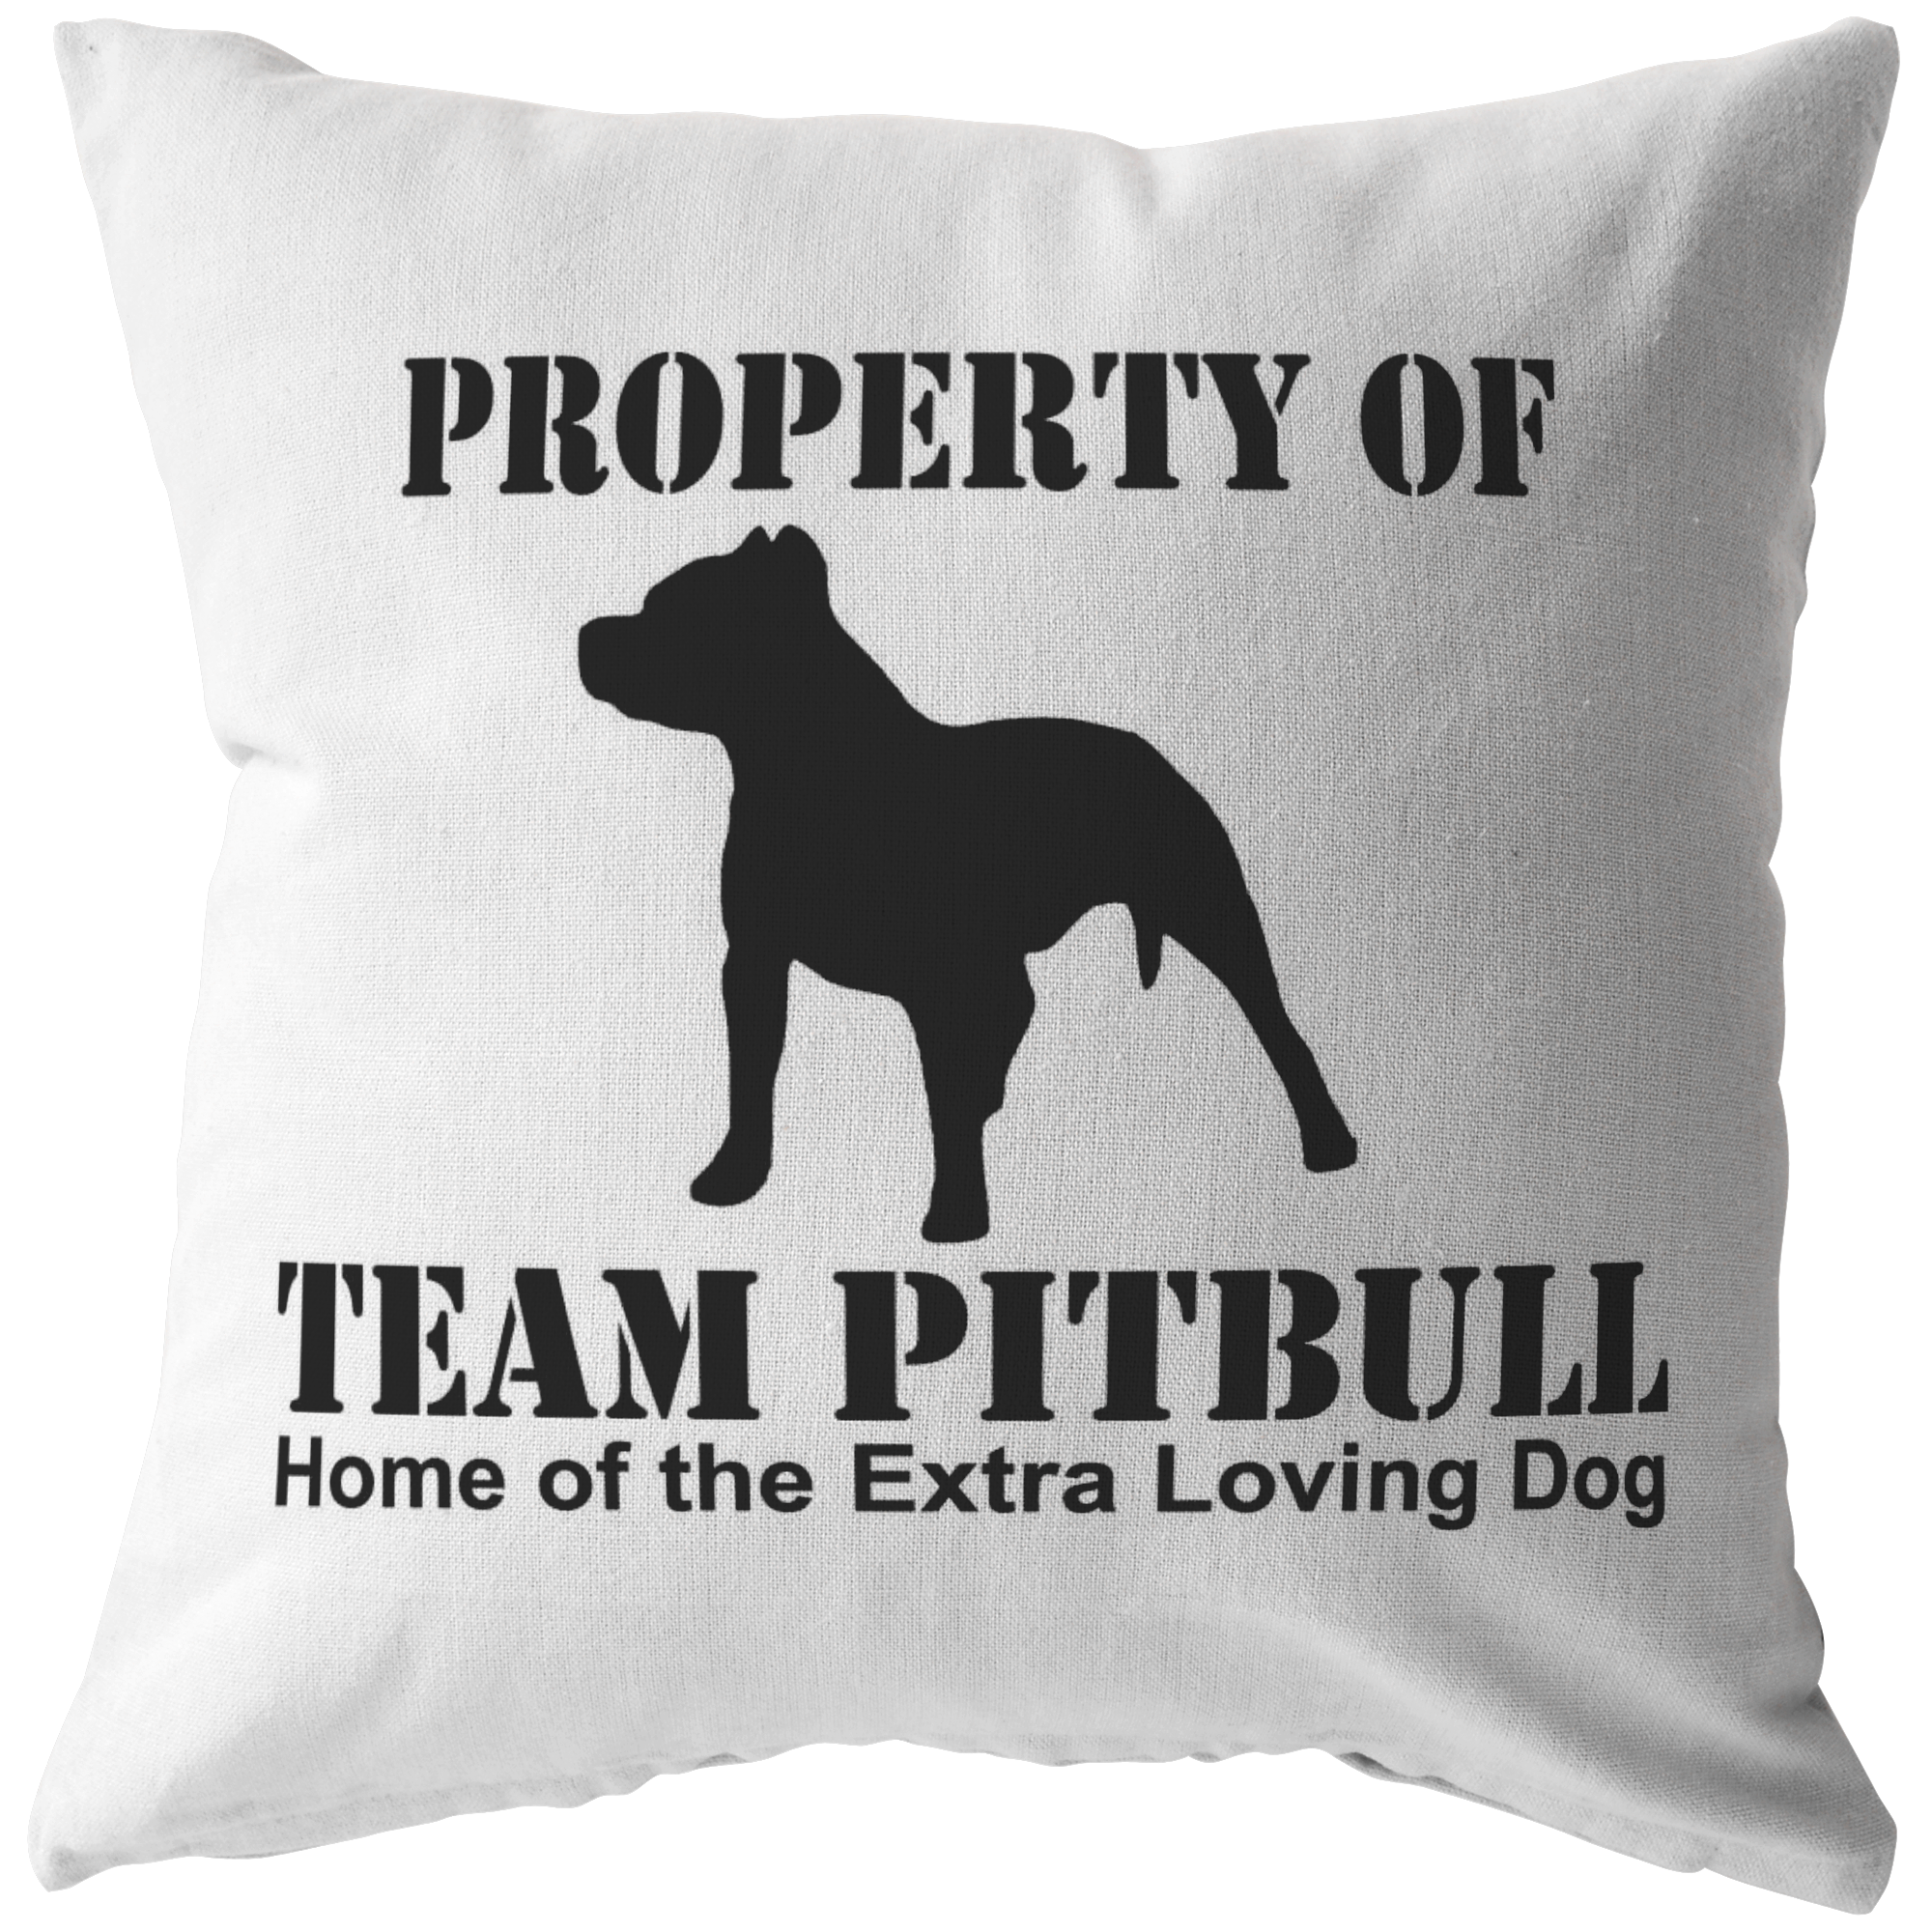 Team Pitbull - Pillow